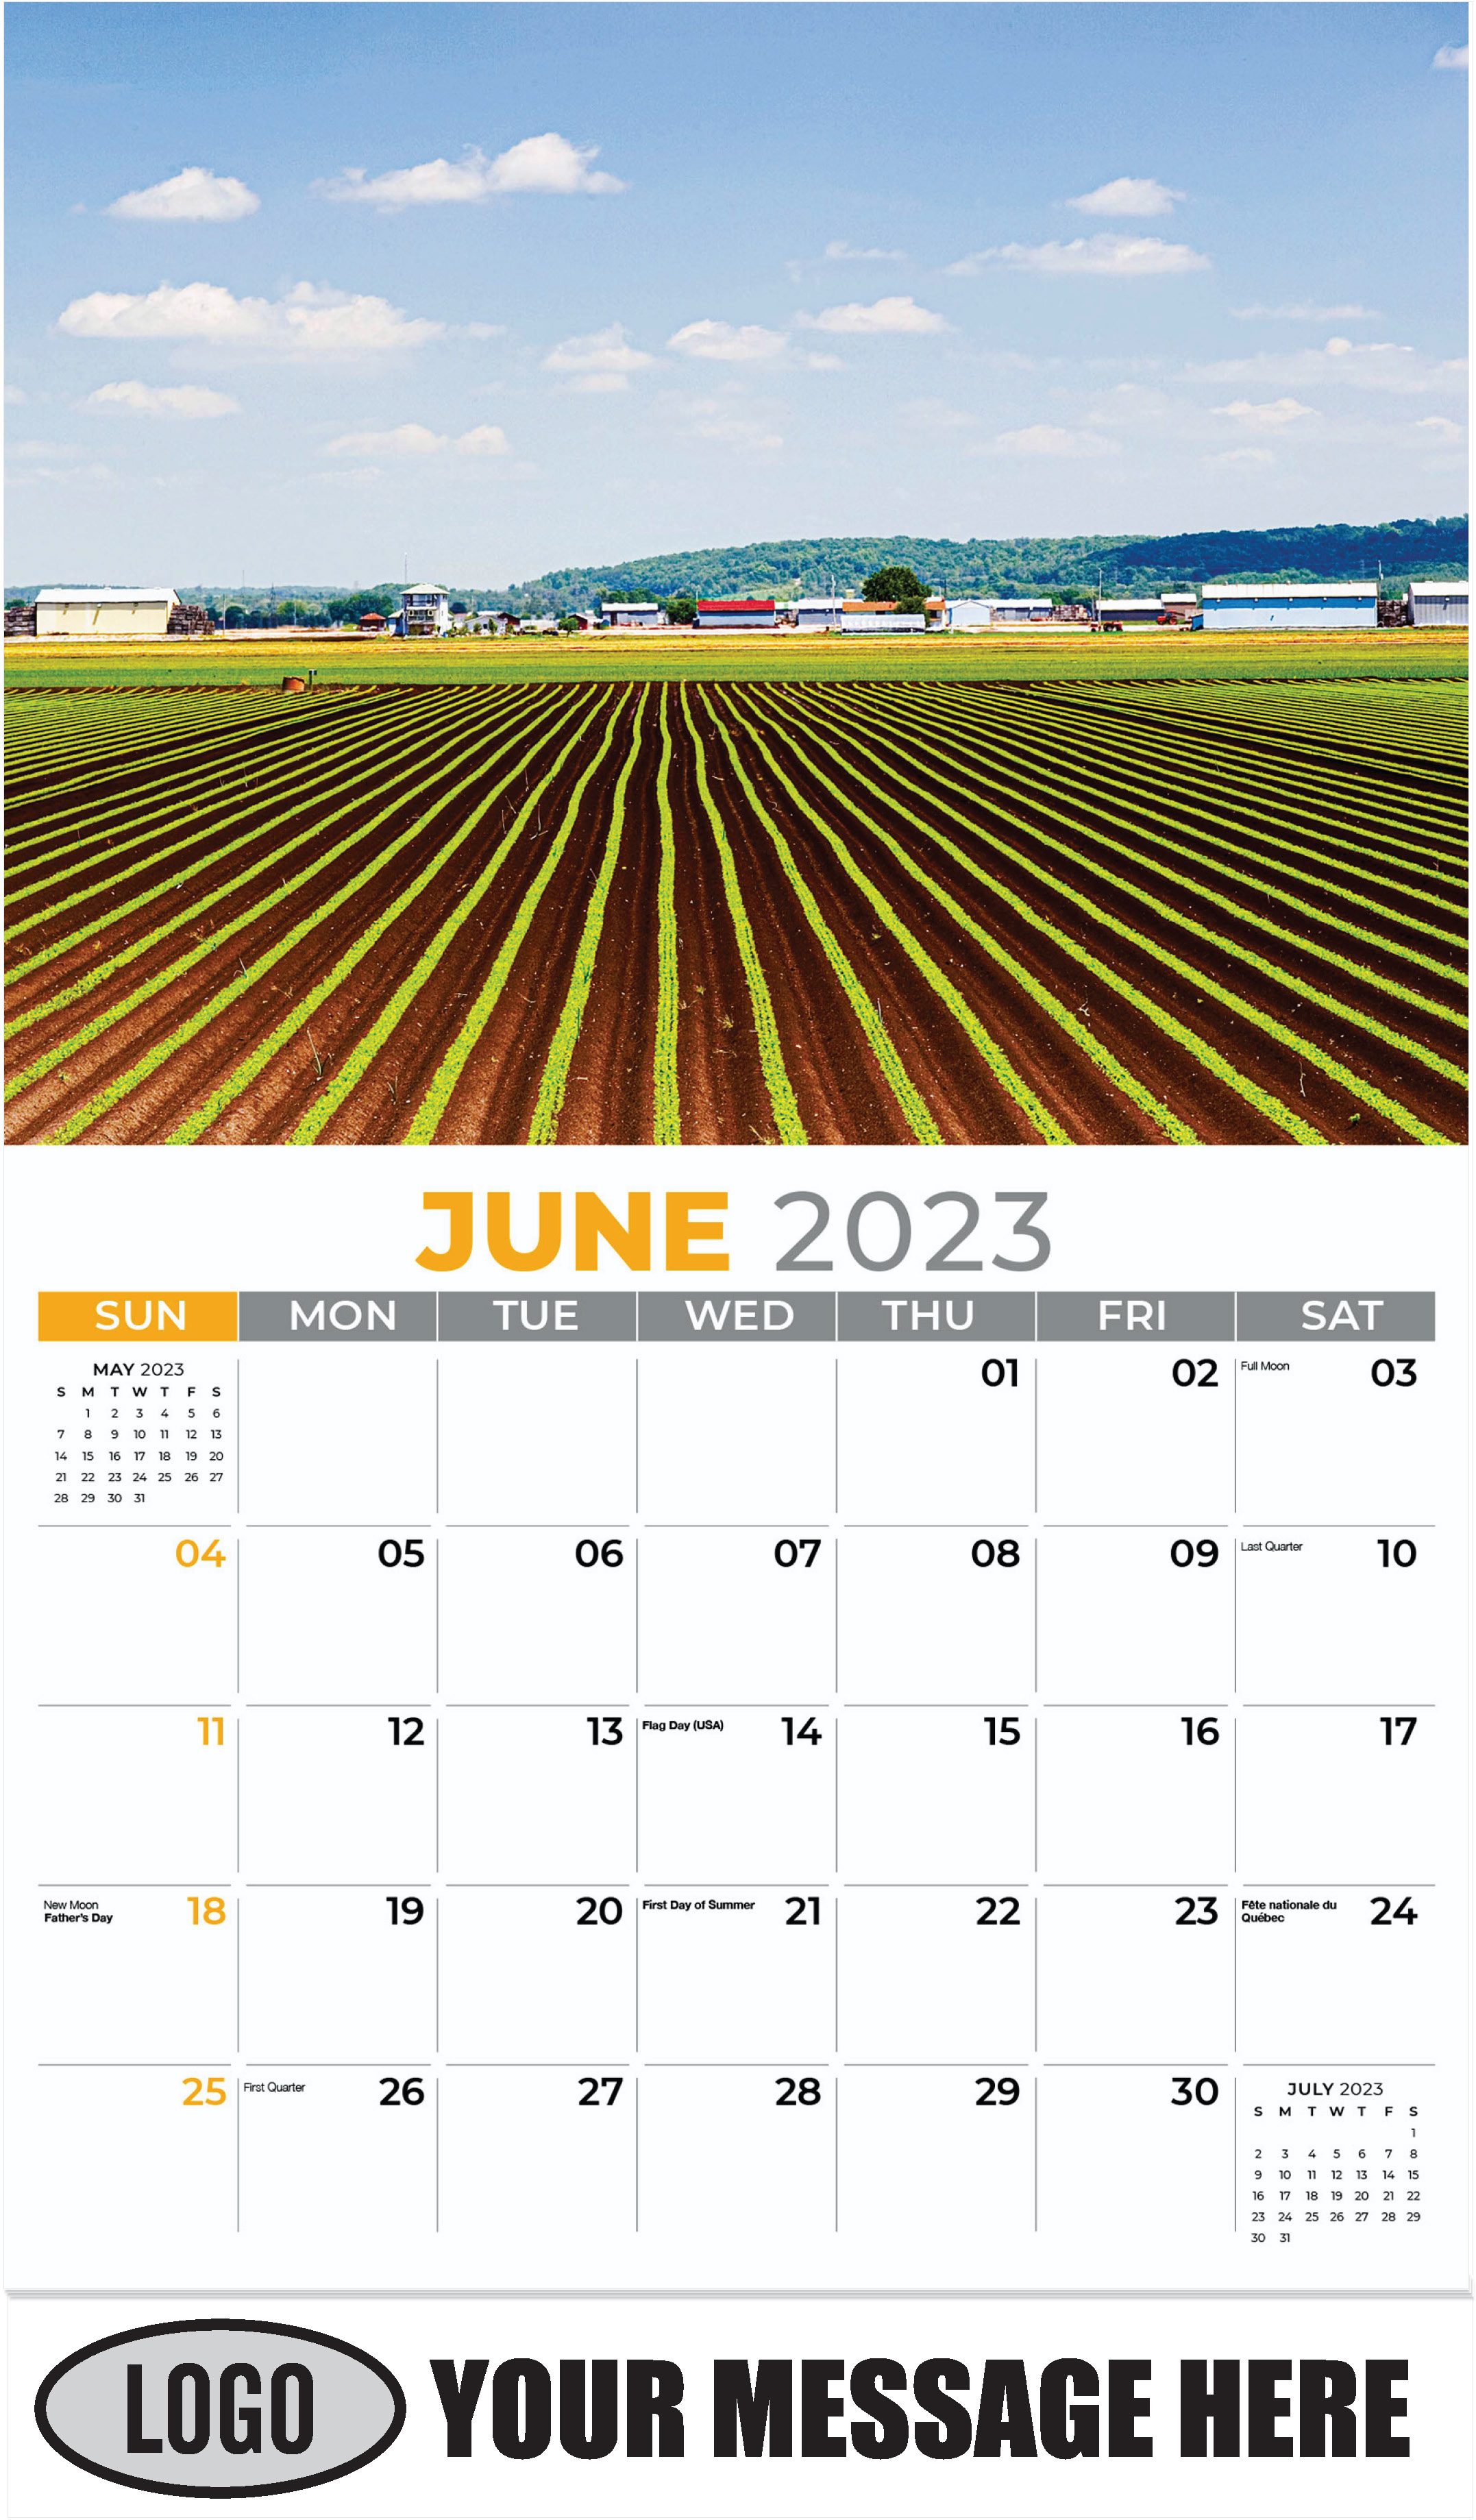 Farm field - June - Country Spirit 2023 Promotional Calendar